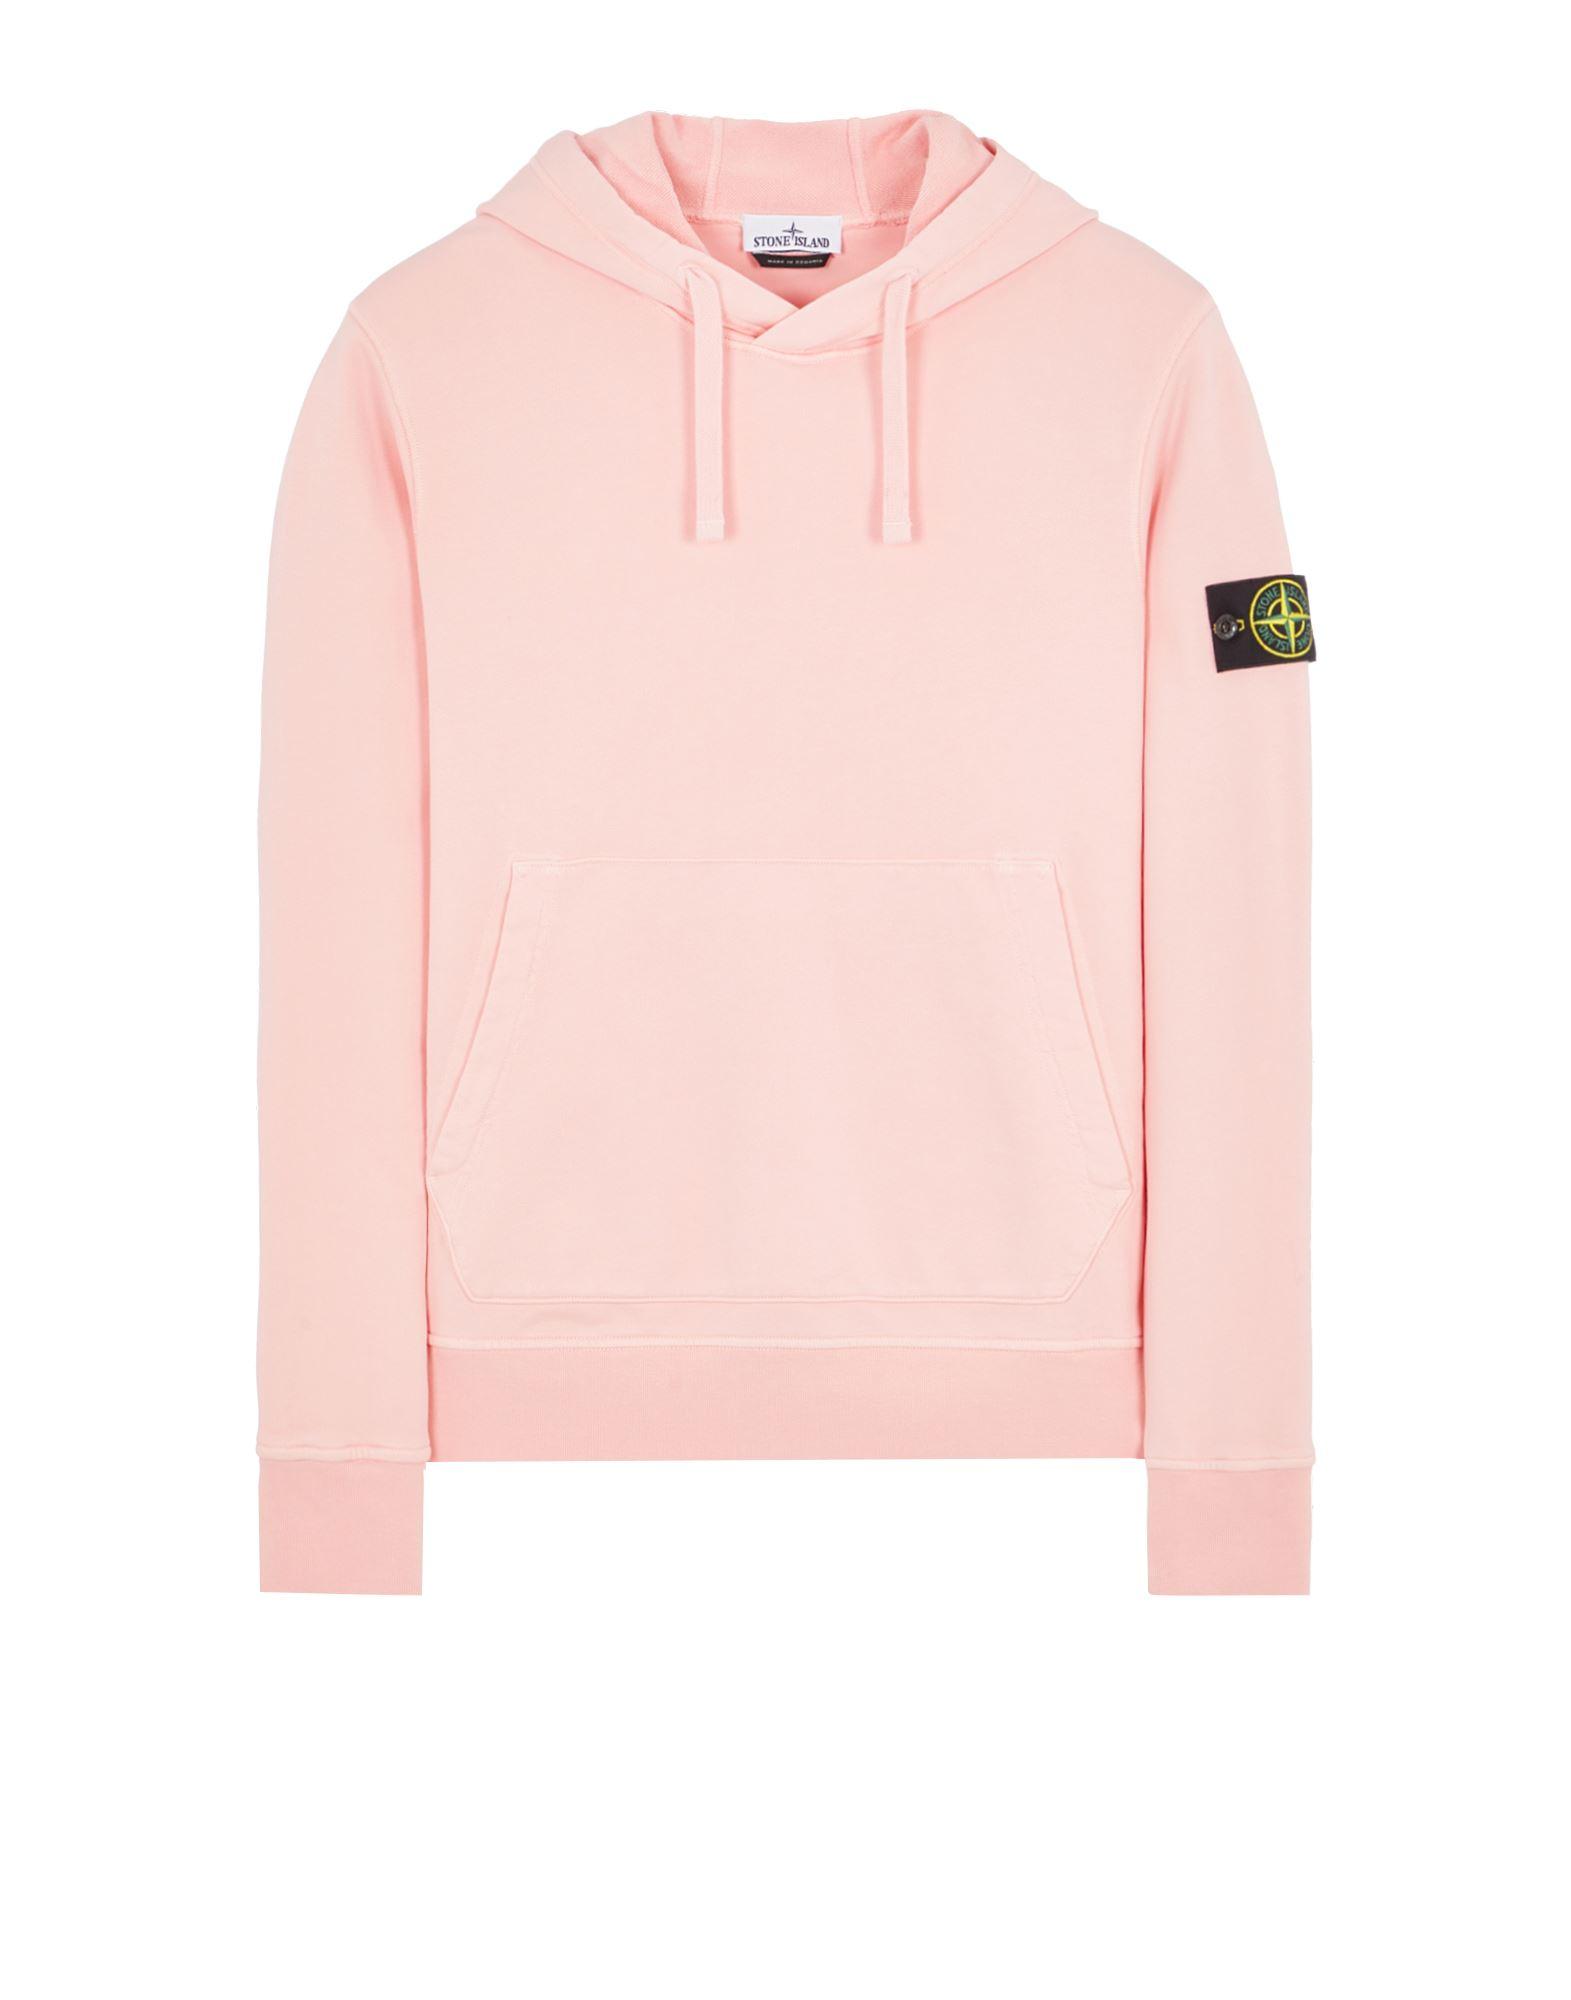 Stone Island Sweatshirt Cotton in Pink for Men | Lyst